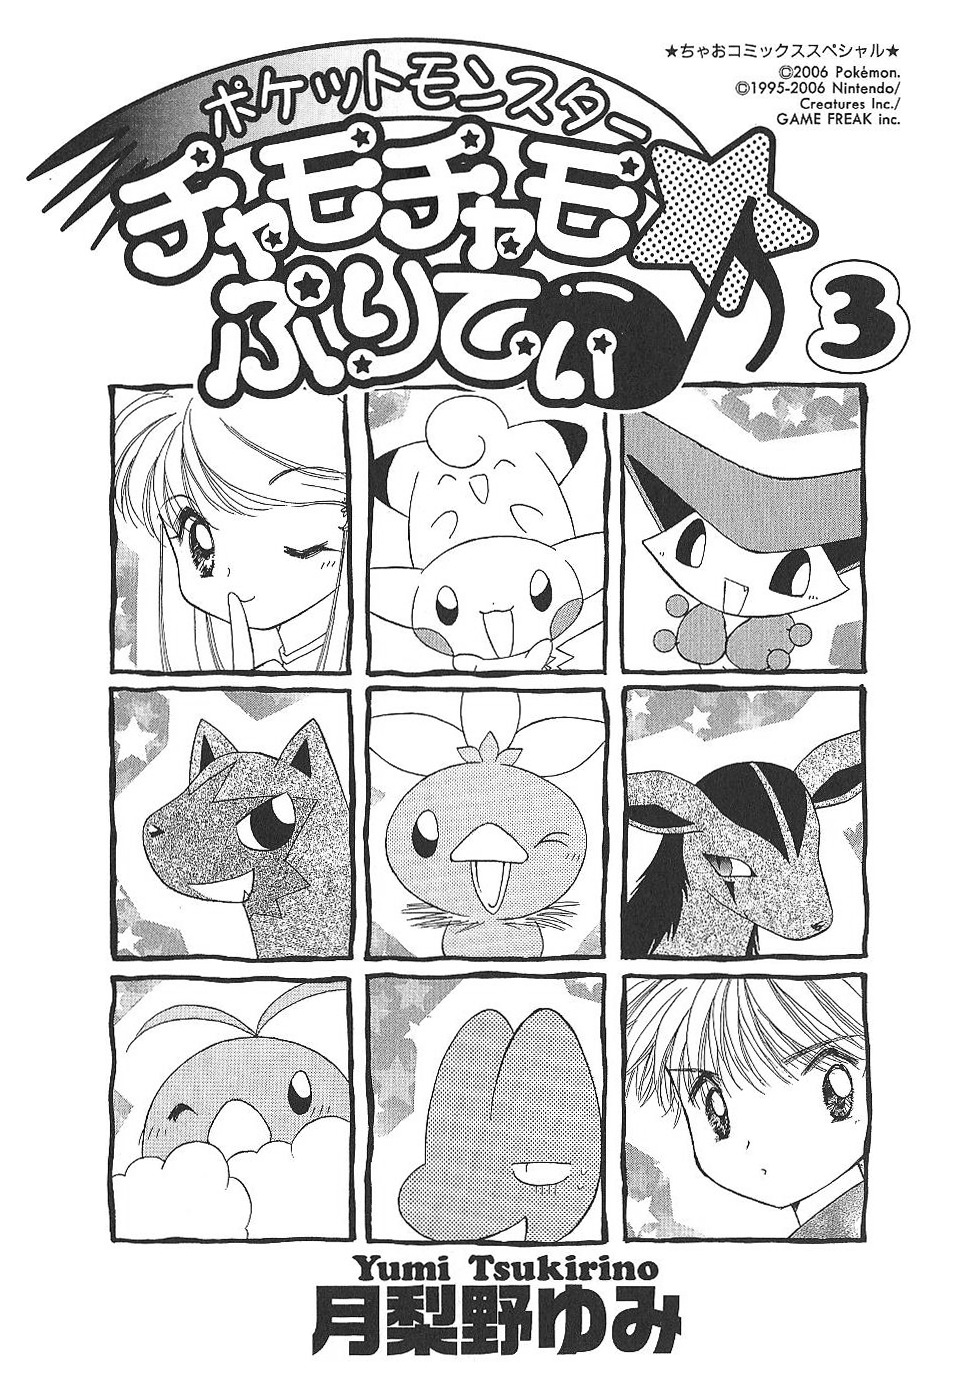 Pokémon Chamo-Chamo ☆ Pretty ♪ - Page 3